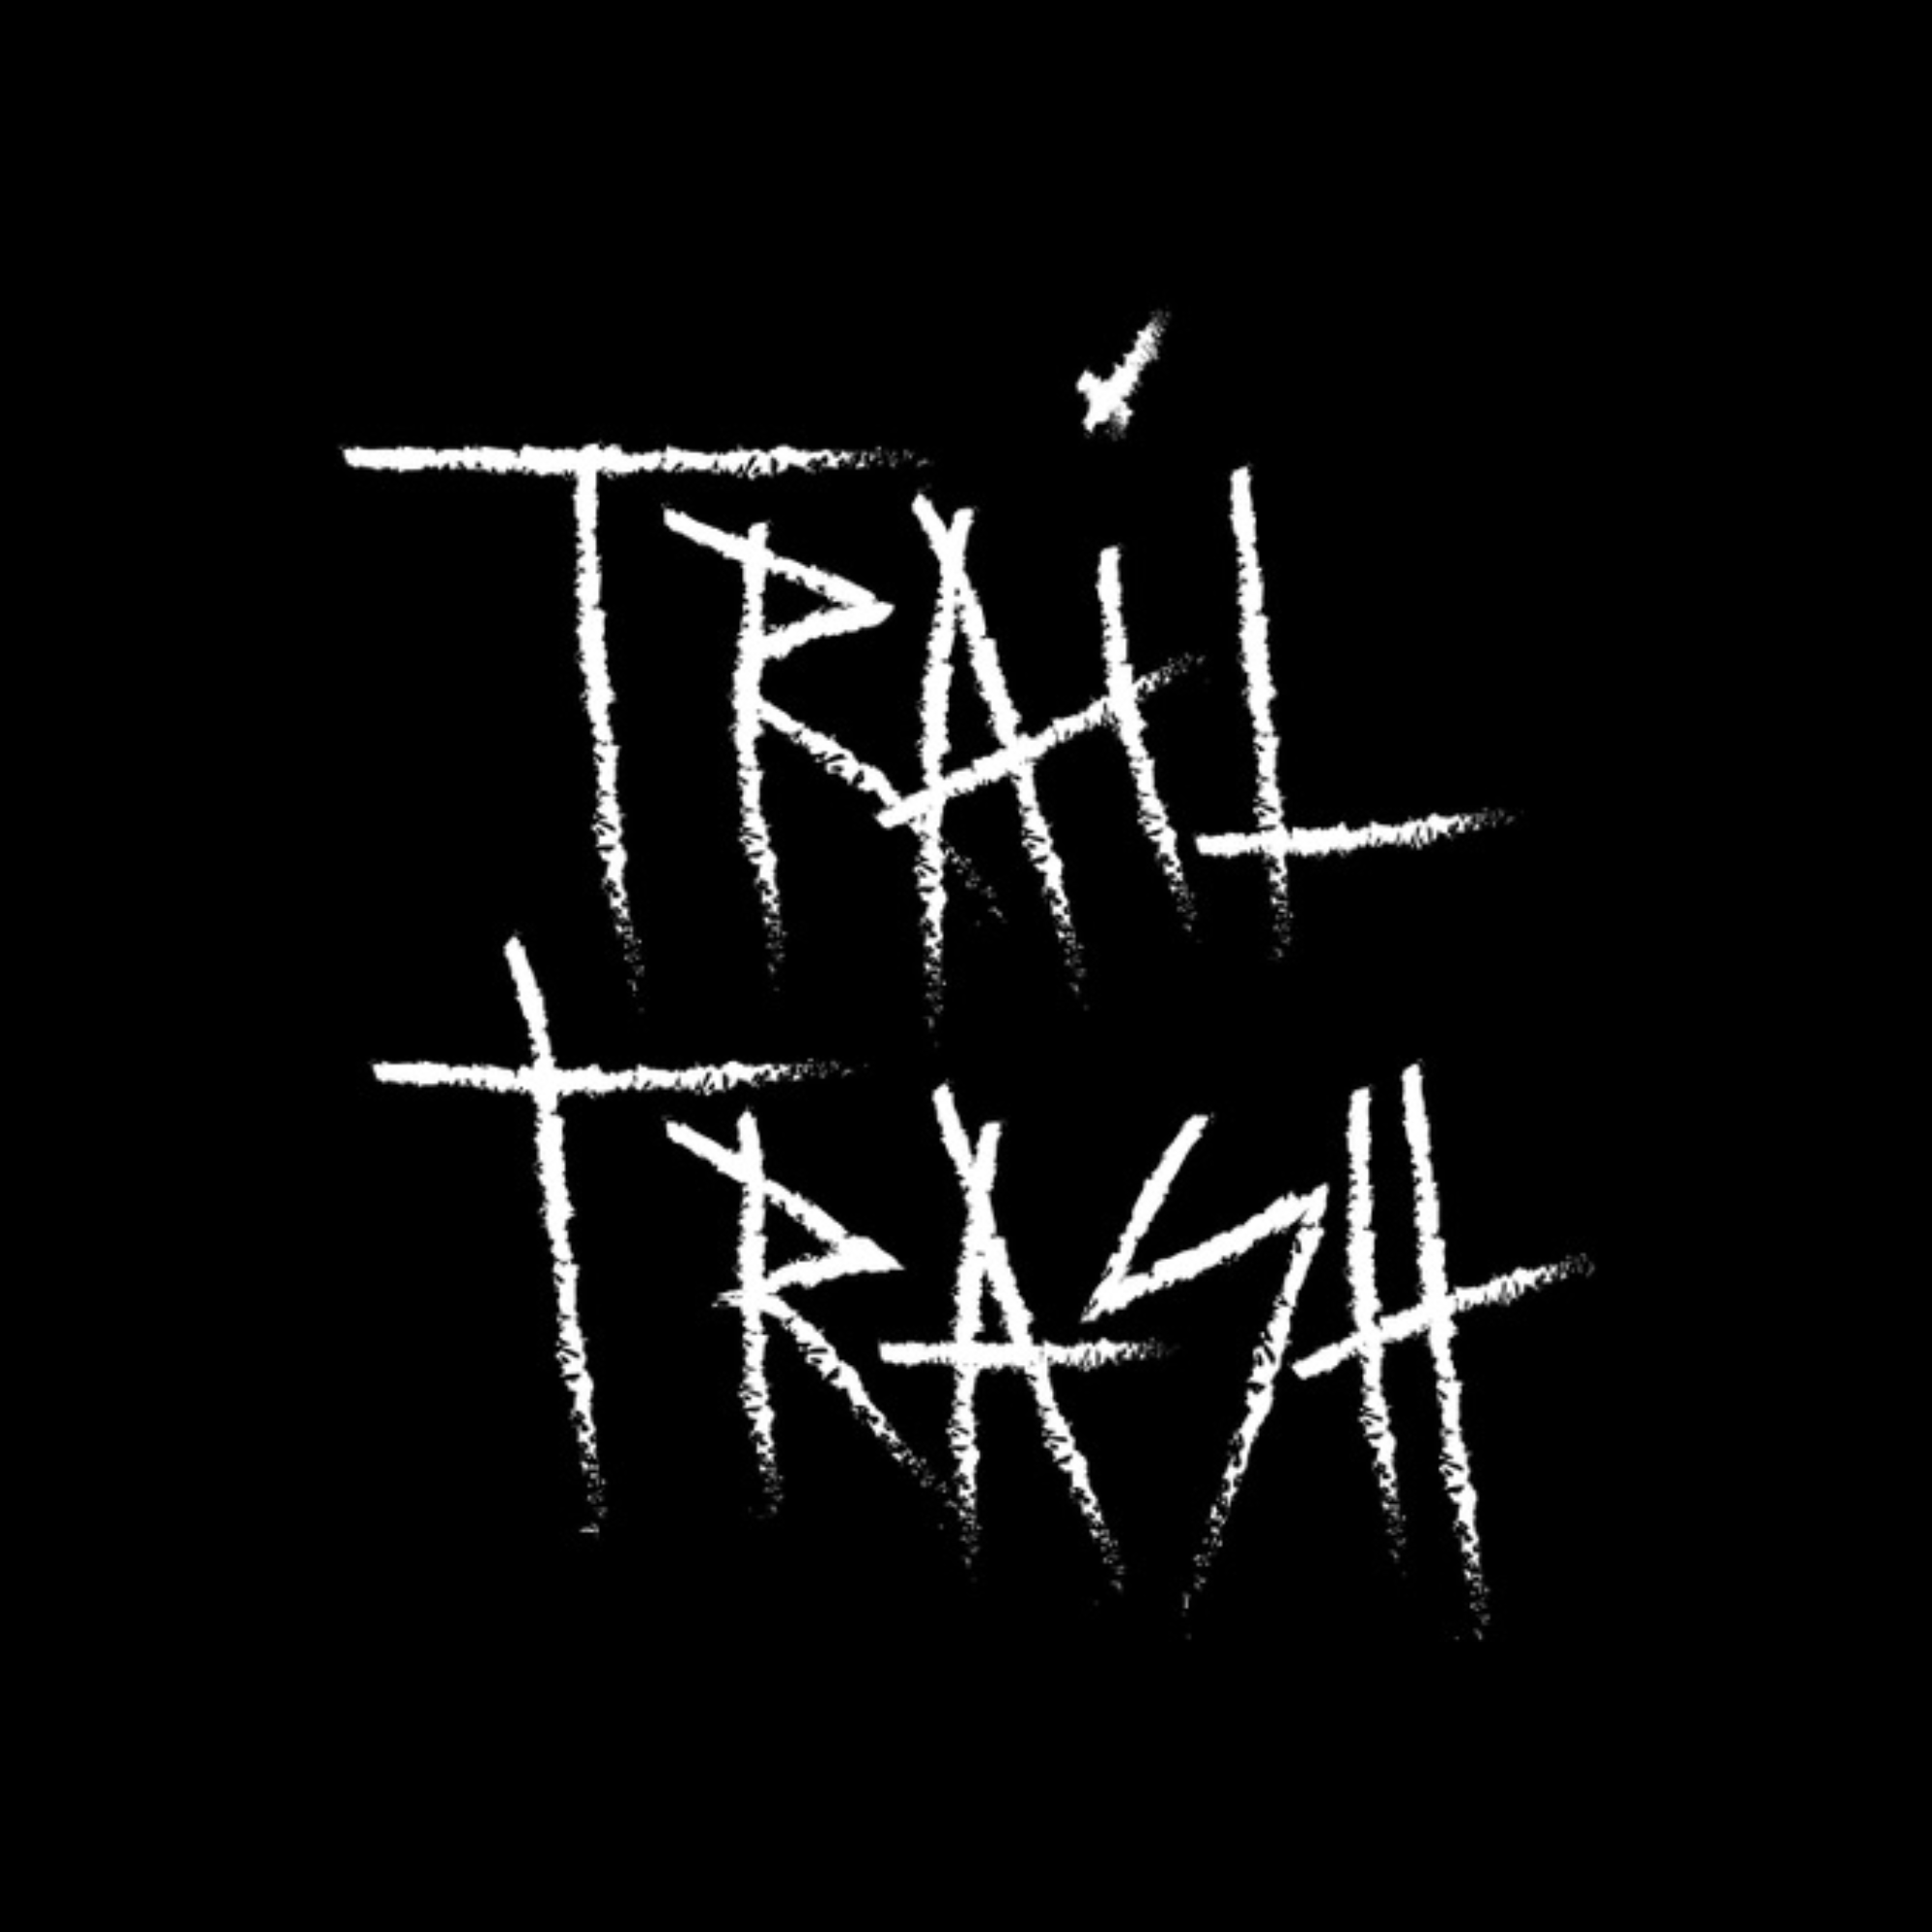 Trail Trash